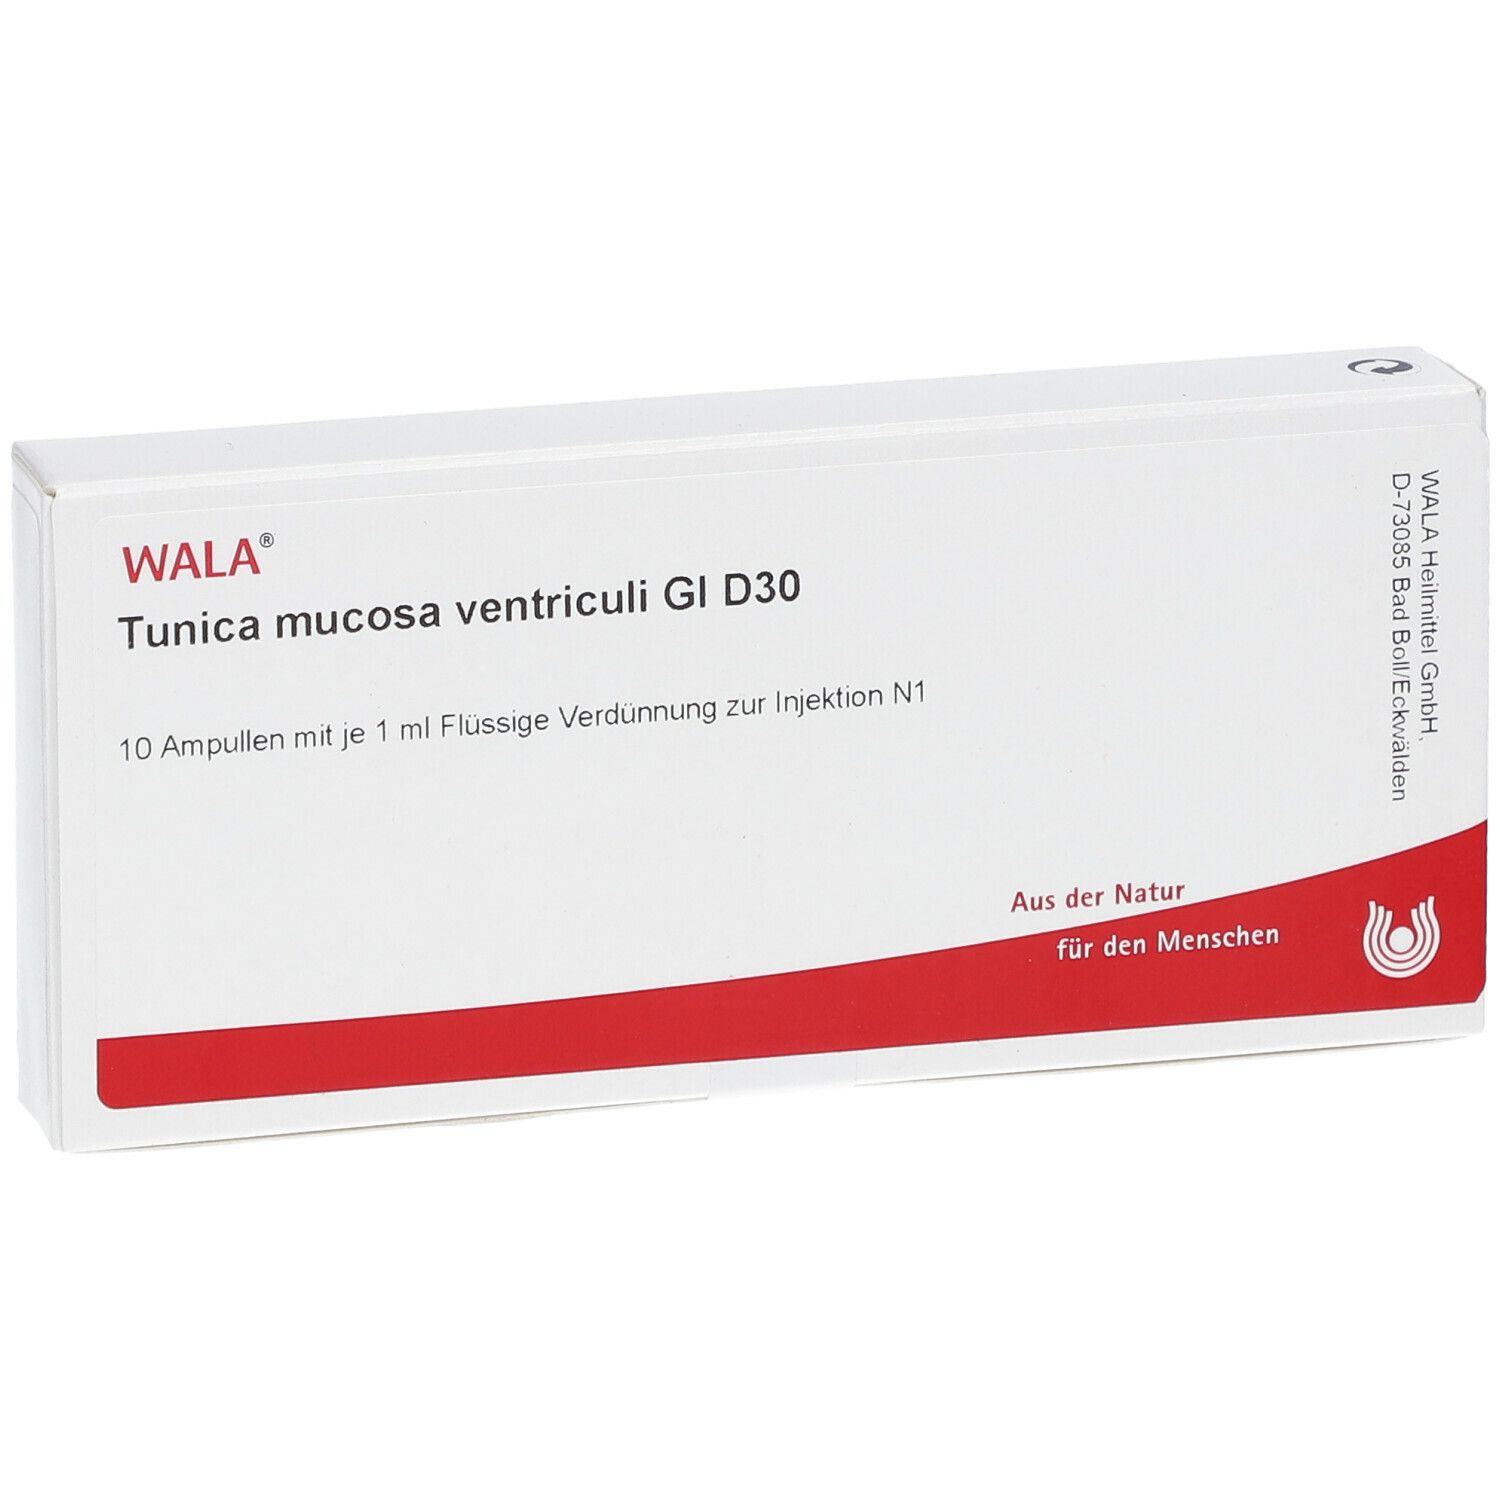 WALA® Tunica mucosa ventriculi Gl D 30